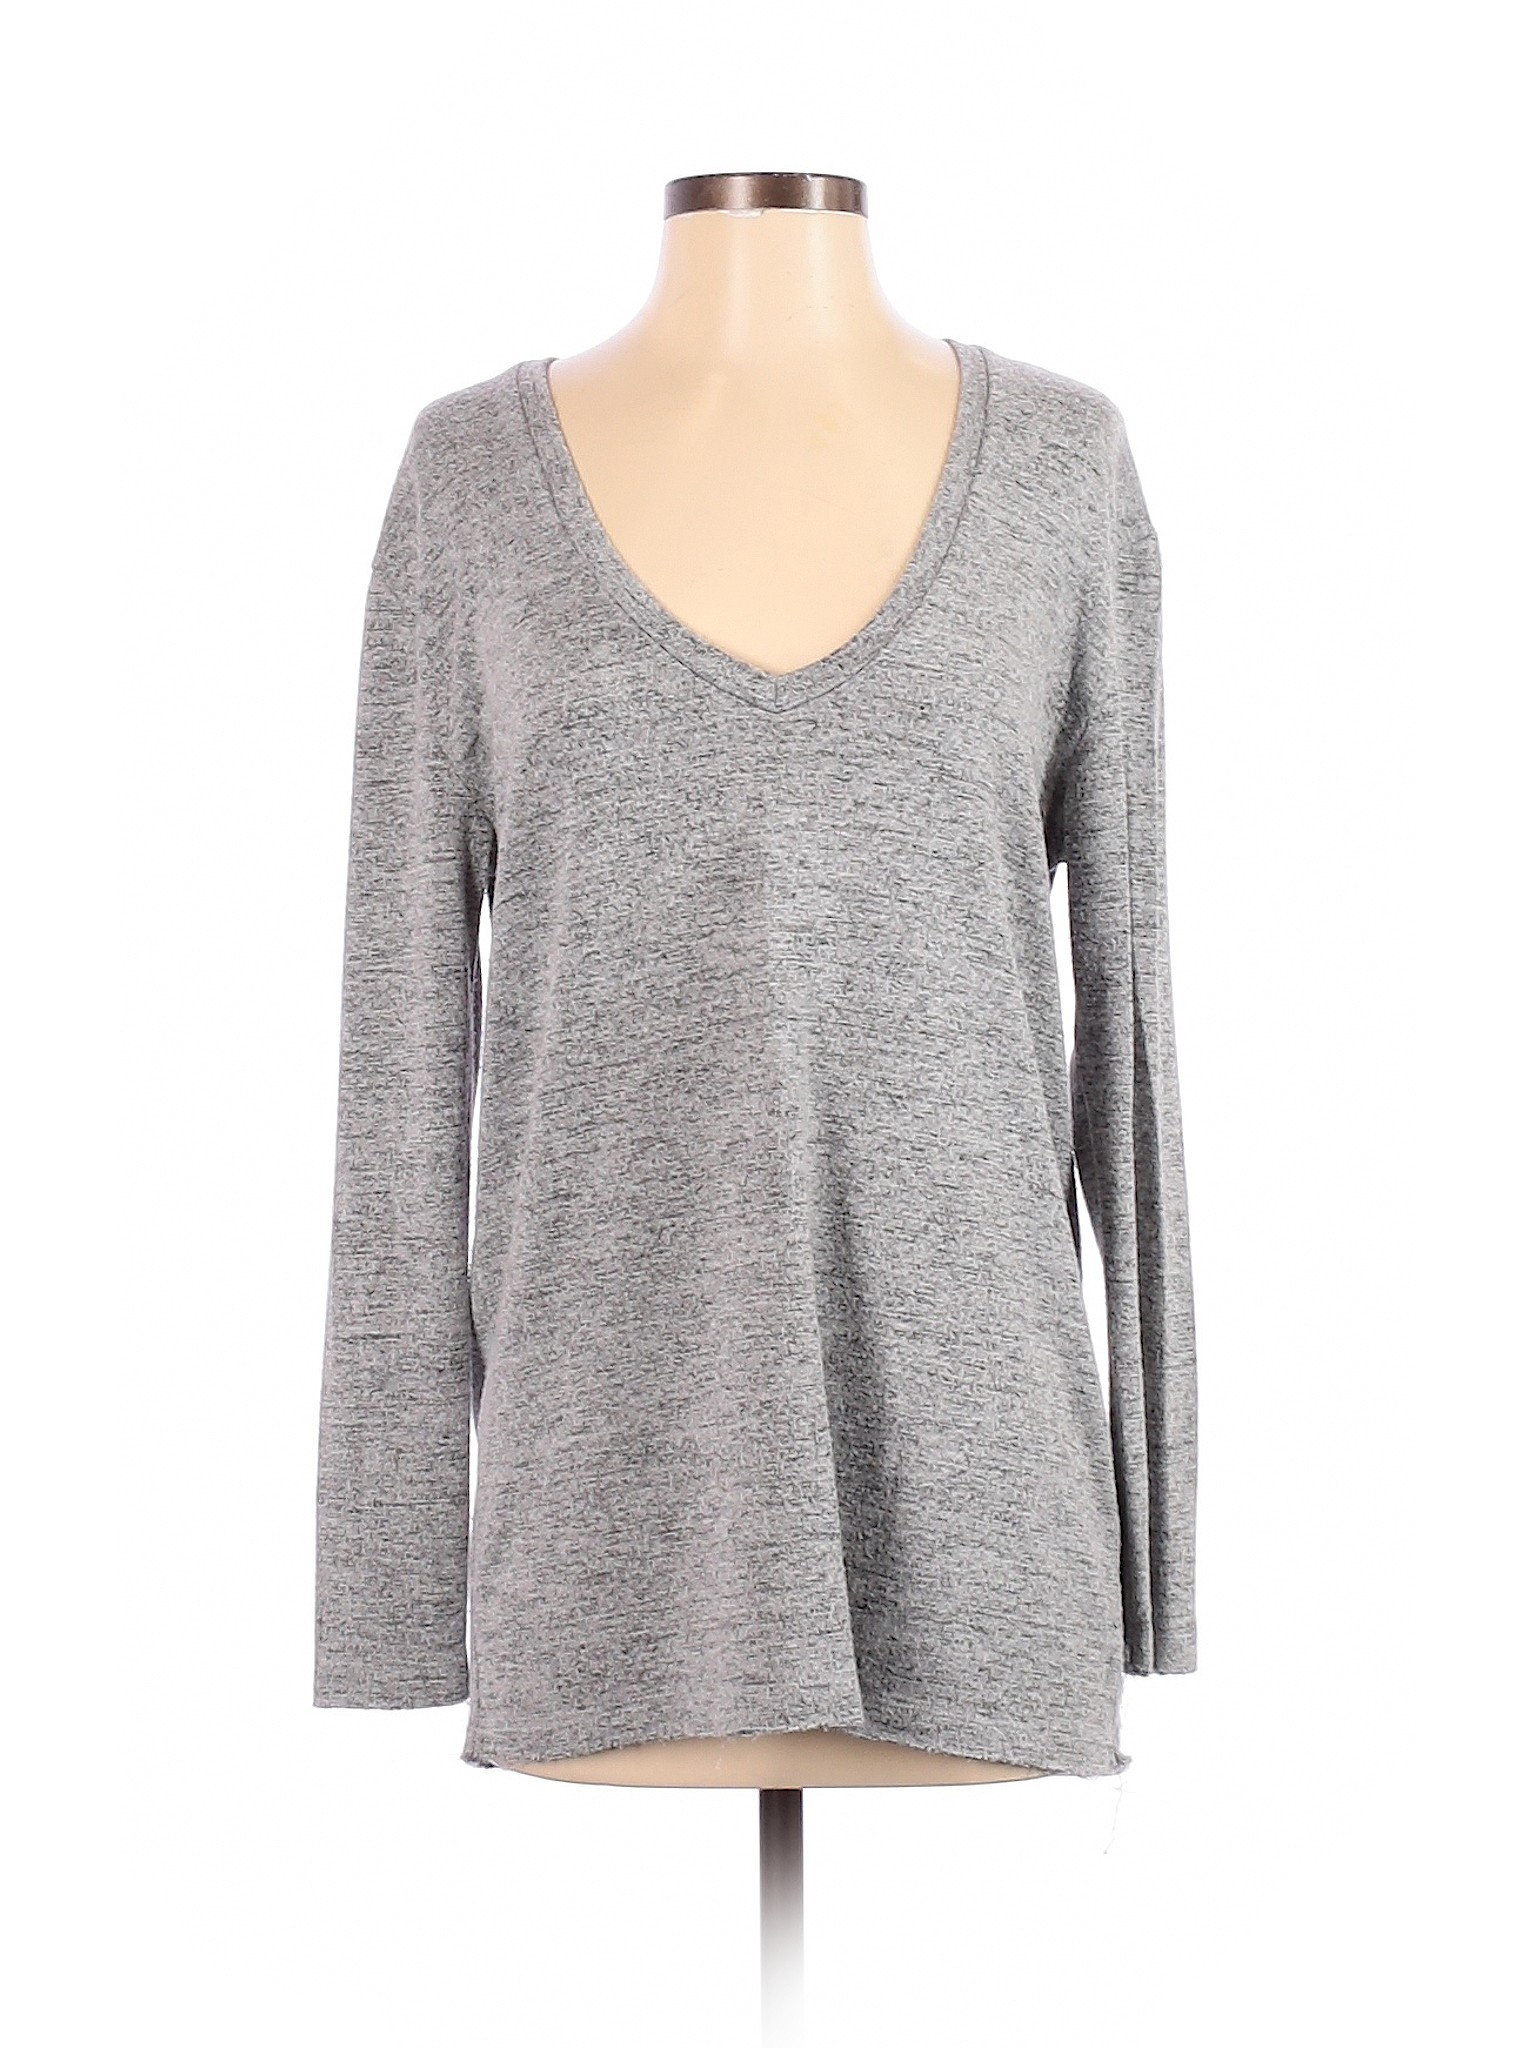 BP. Women Gray Pullover Sweater S | eBay